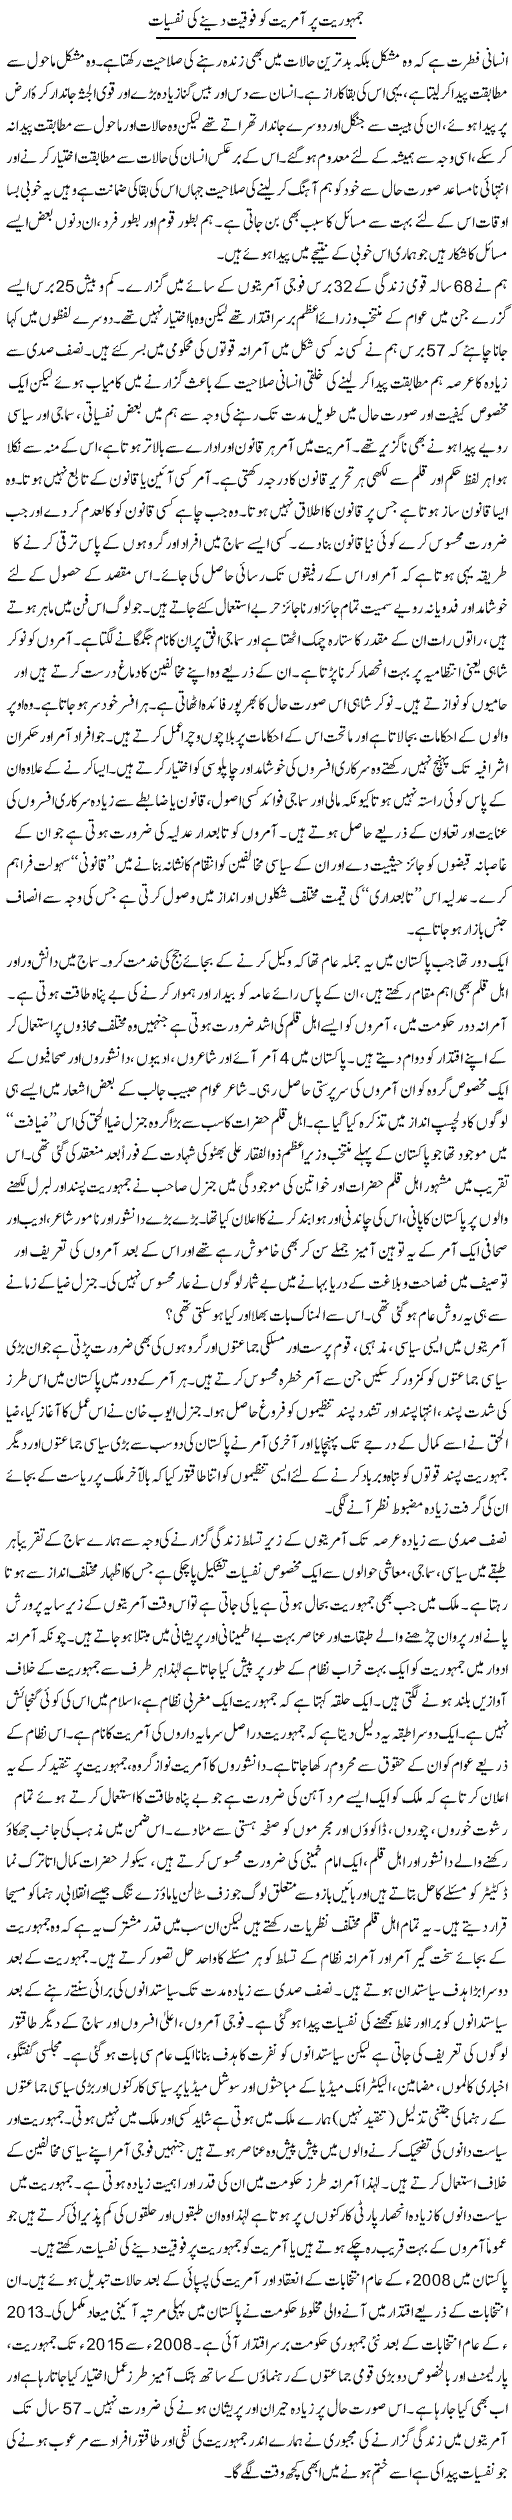 Jamhoriat Par Aamriyat Ko Foqiat Dainay Ki Nafsiyat | Zahida Hina | Daily Urdu Columns